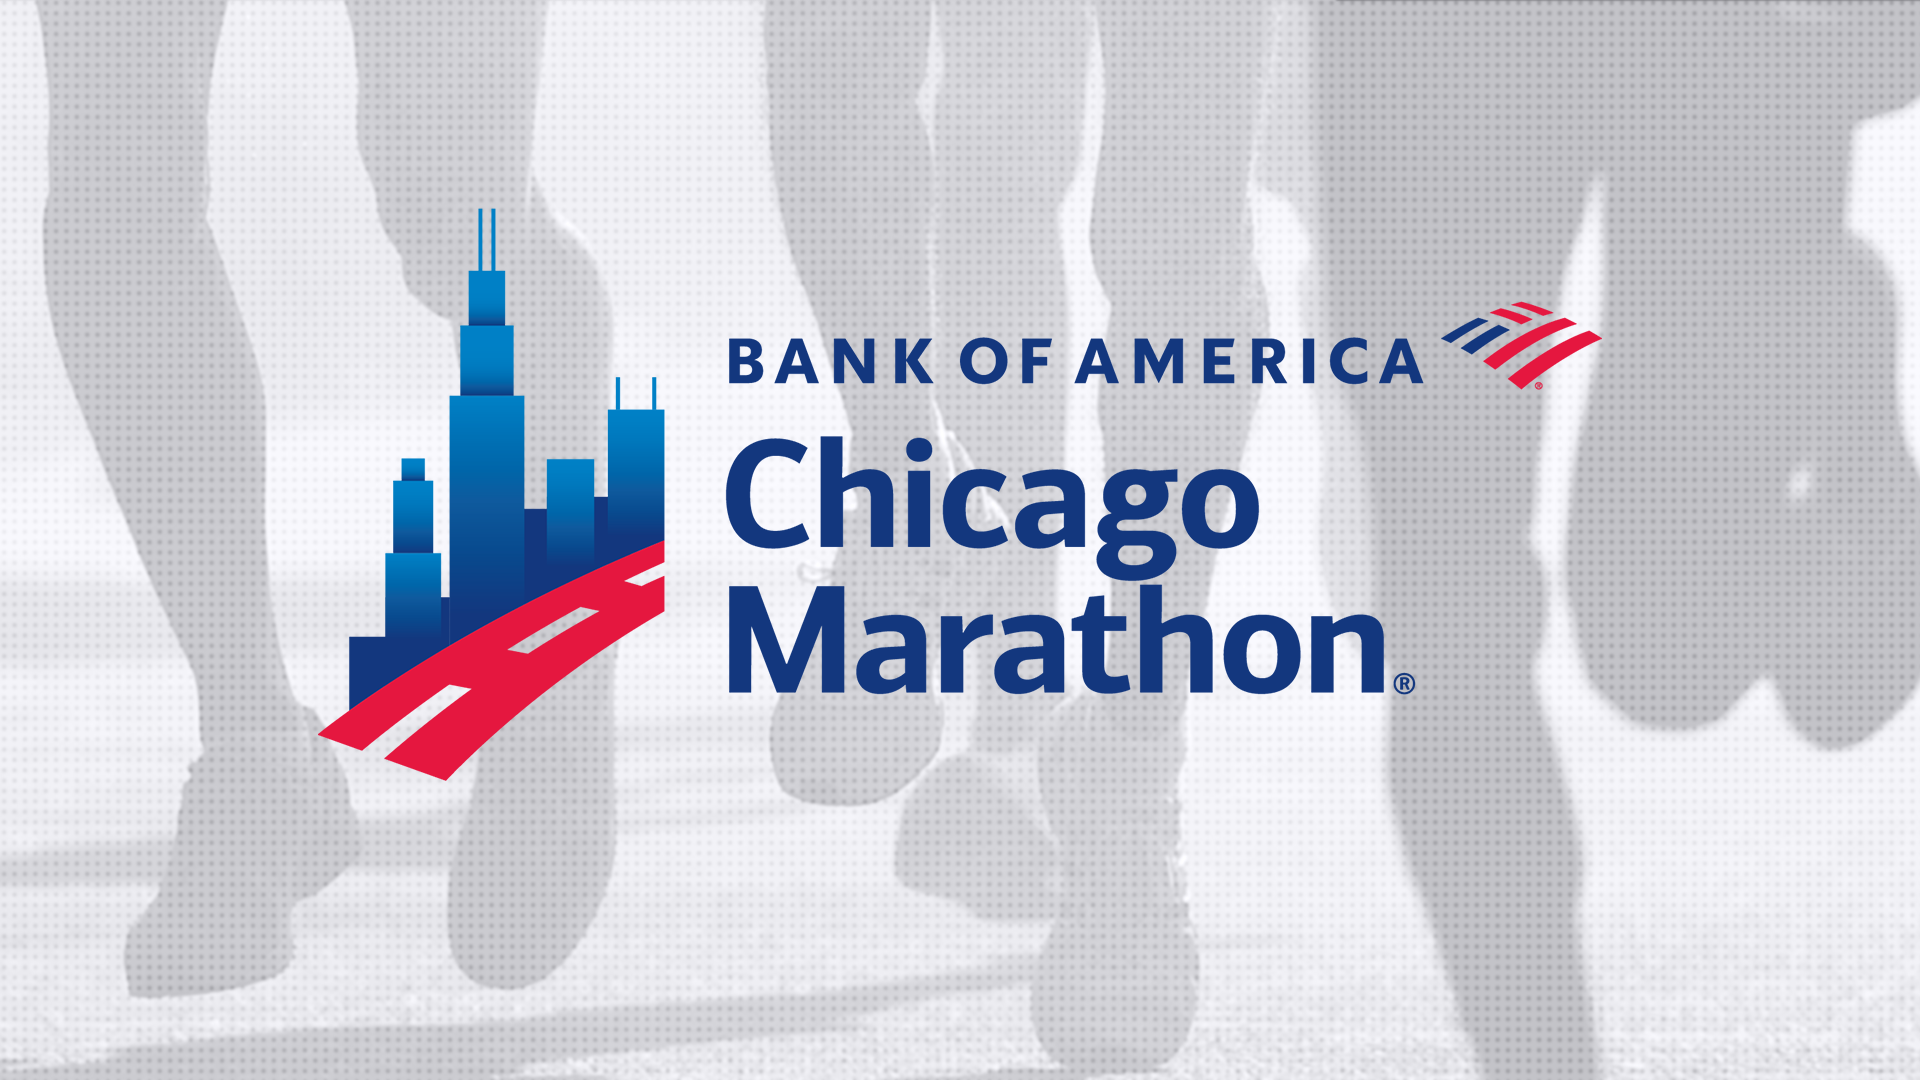 Bank of America Chicago Marathon Official Merchandise